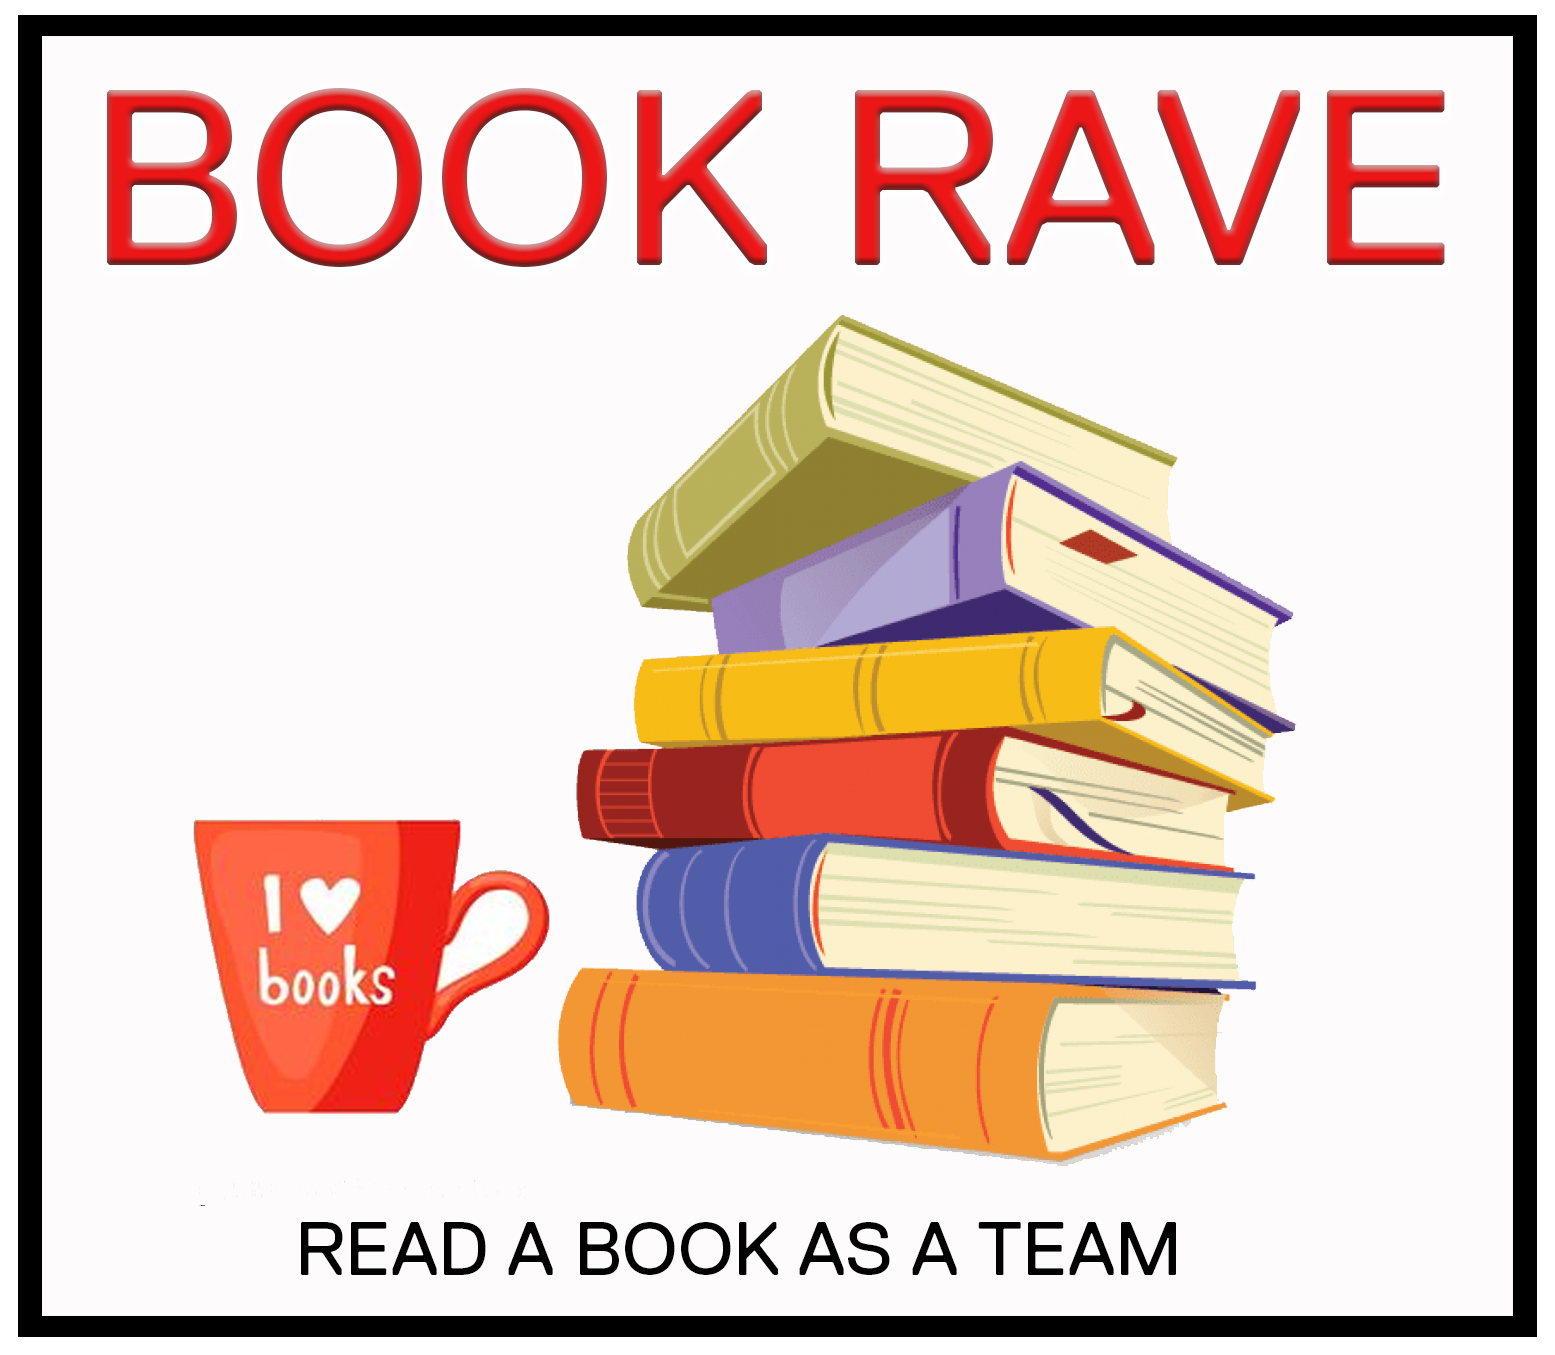 The Value Web Book Rave Logo. Read a book as a team.